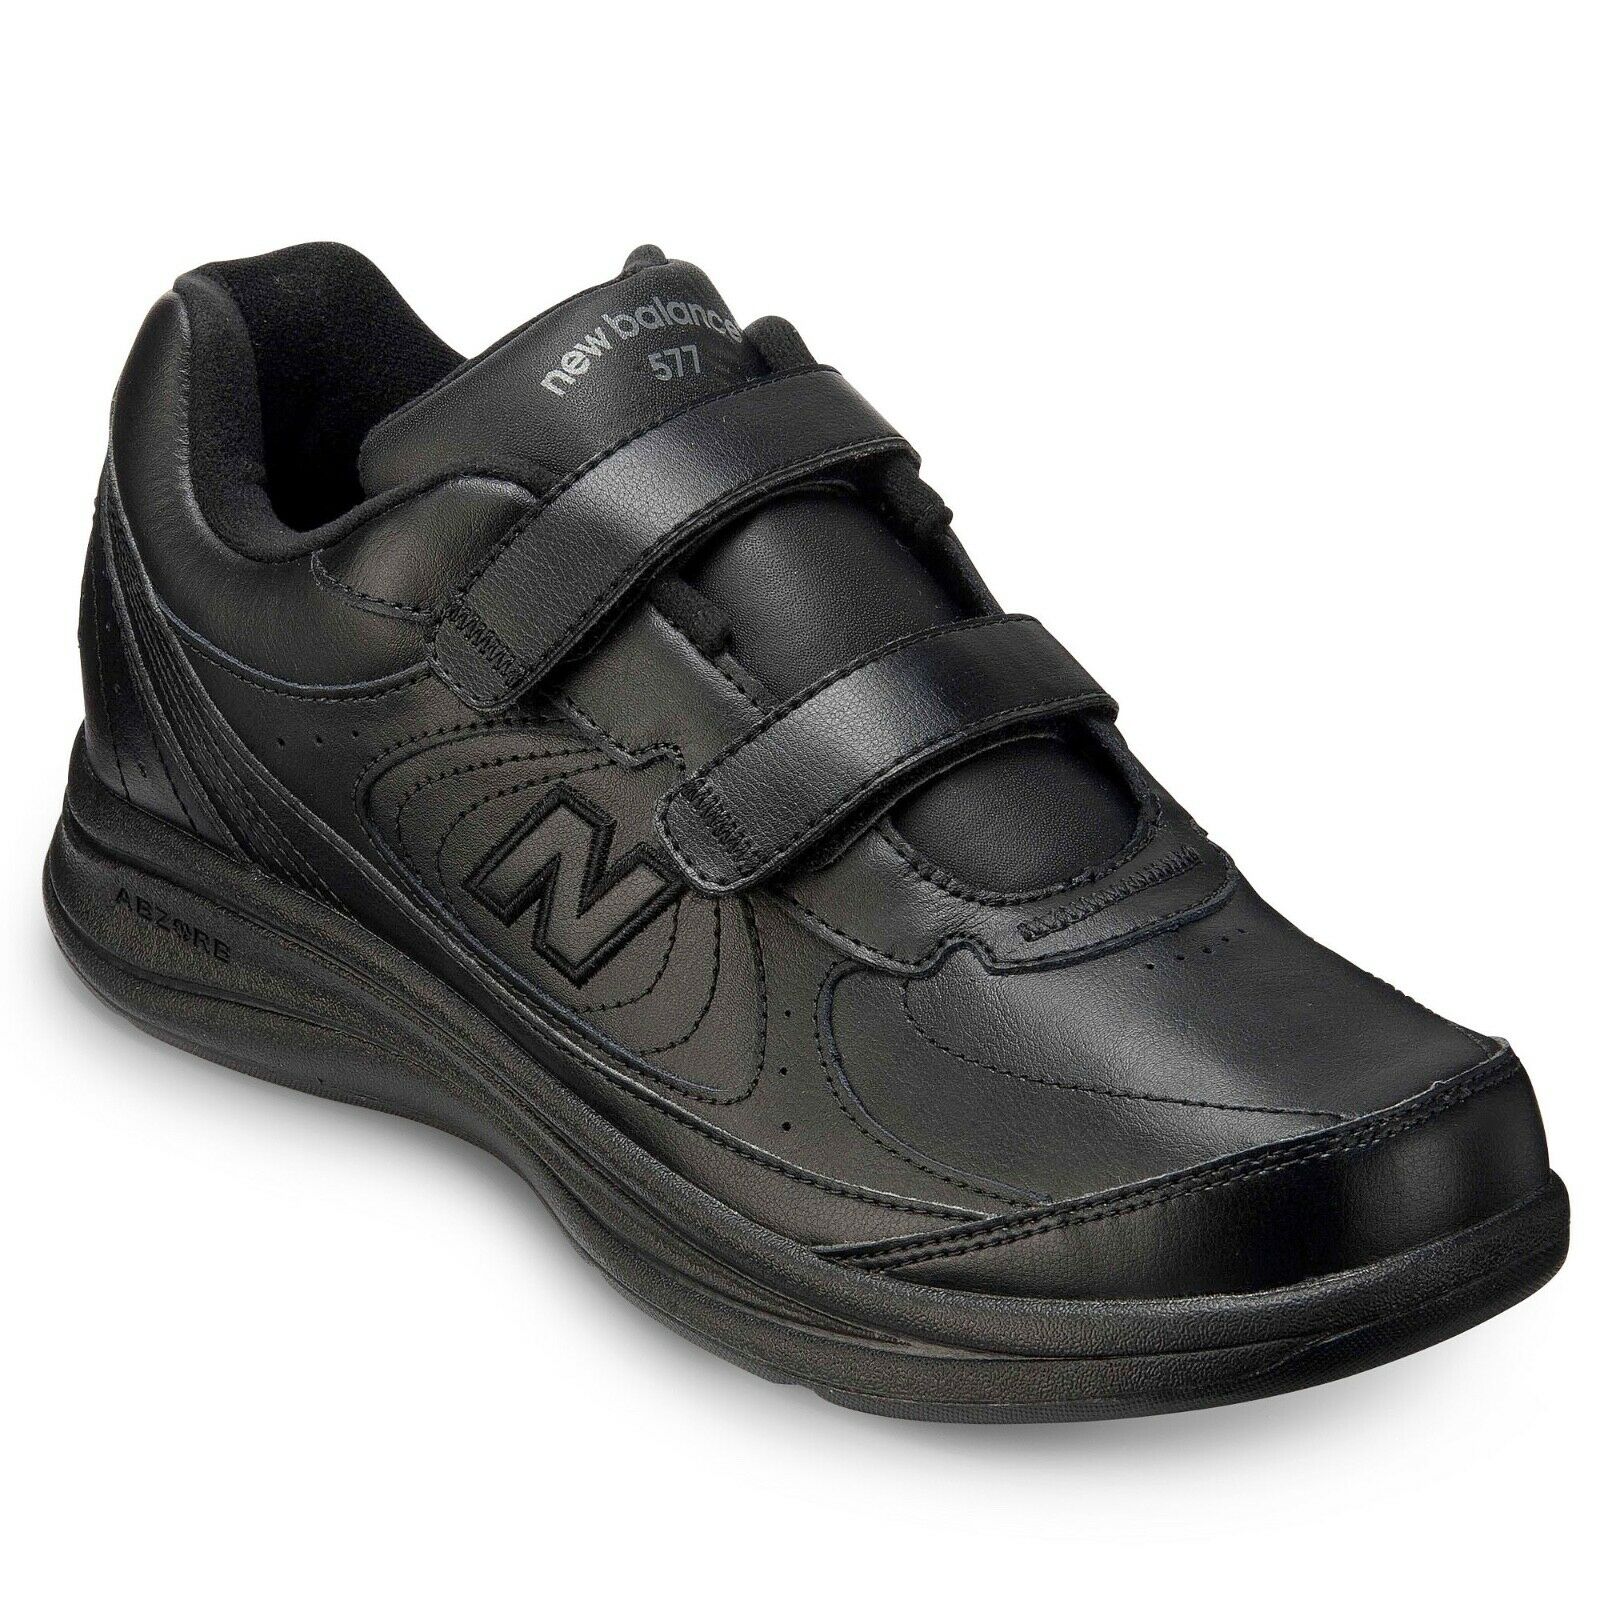 Brand new New Balance size 10.5 men's 577 black walking shoes